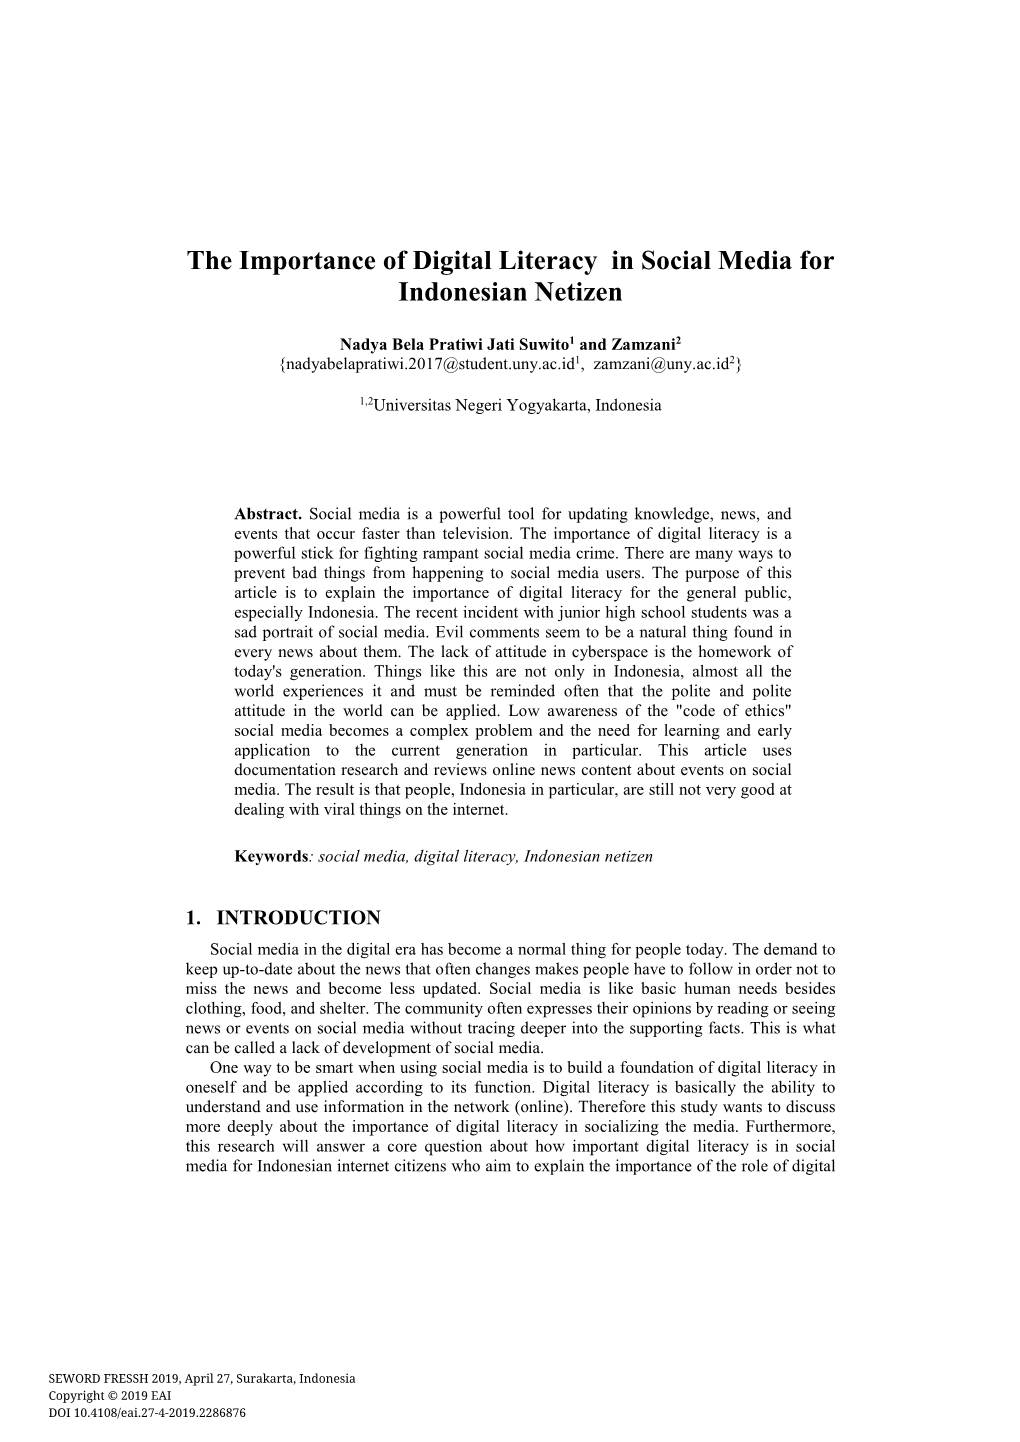 The Importance of Digital Literacy in Social Media for Indonesian Netizen